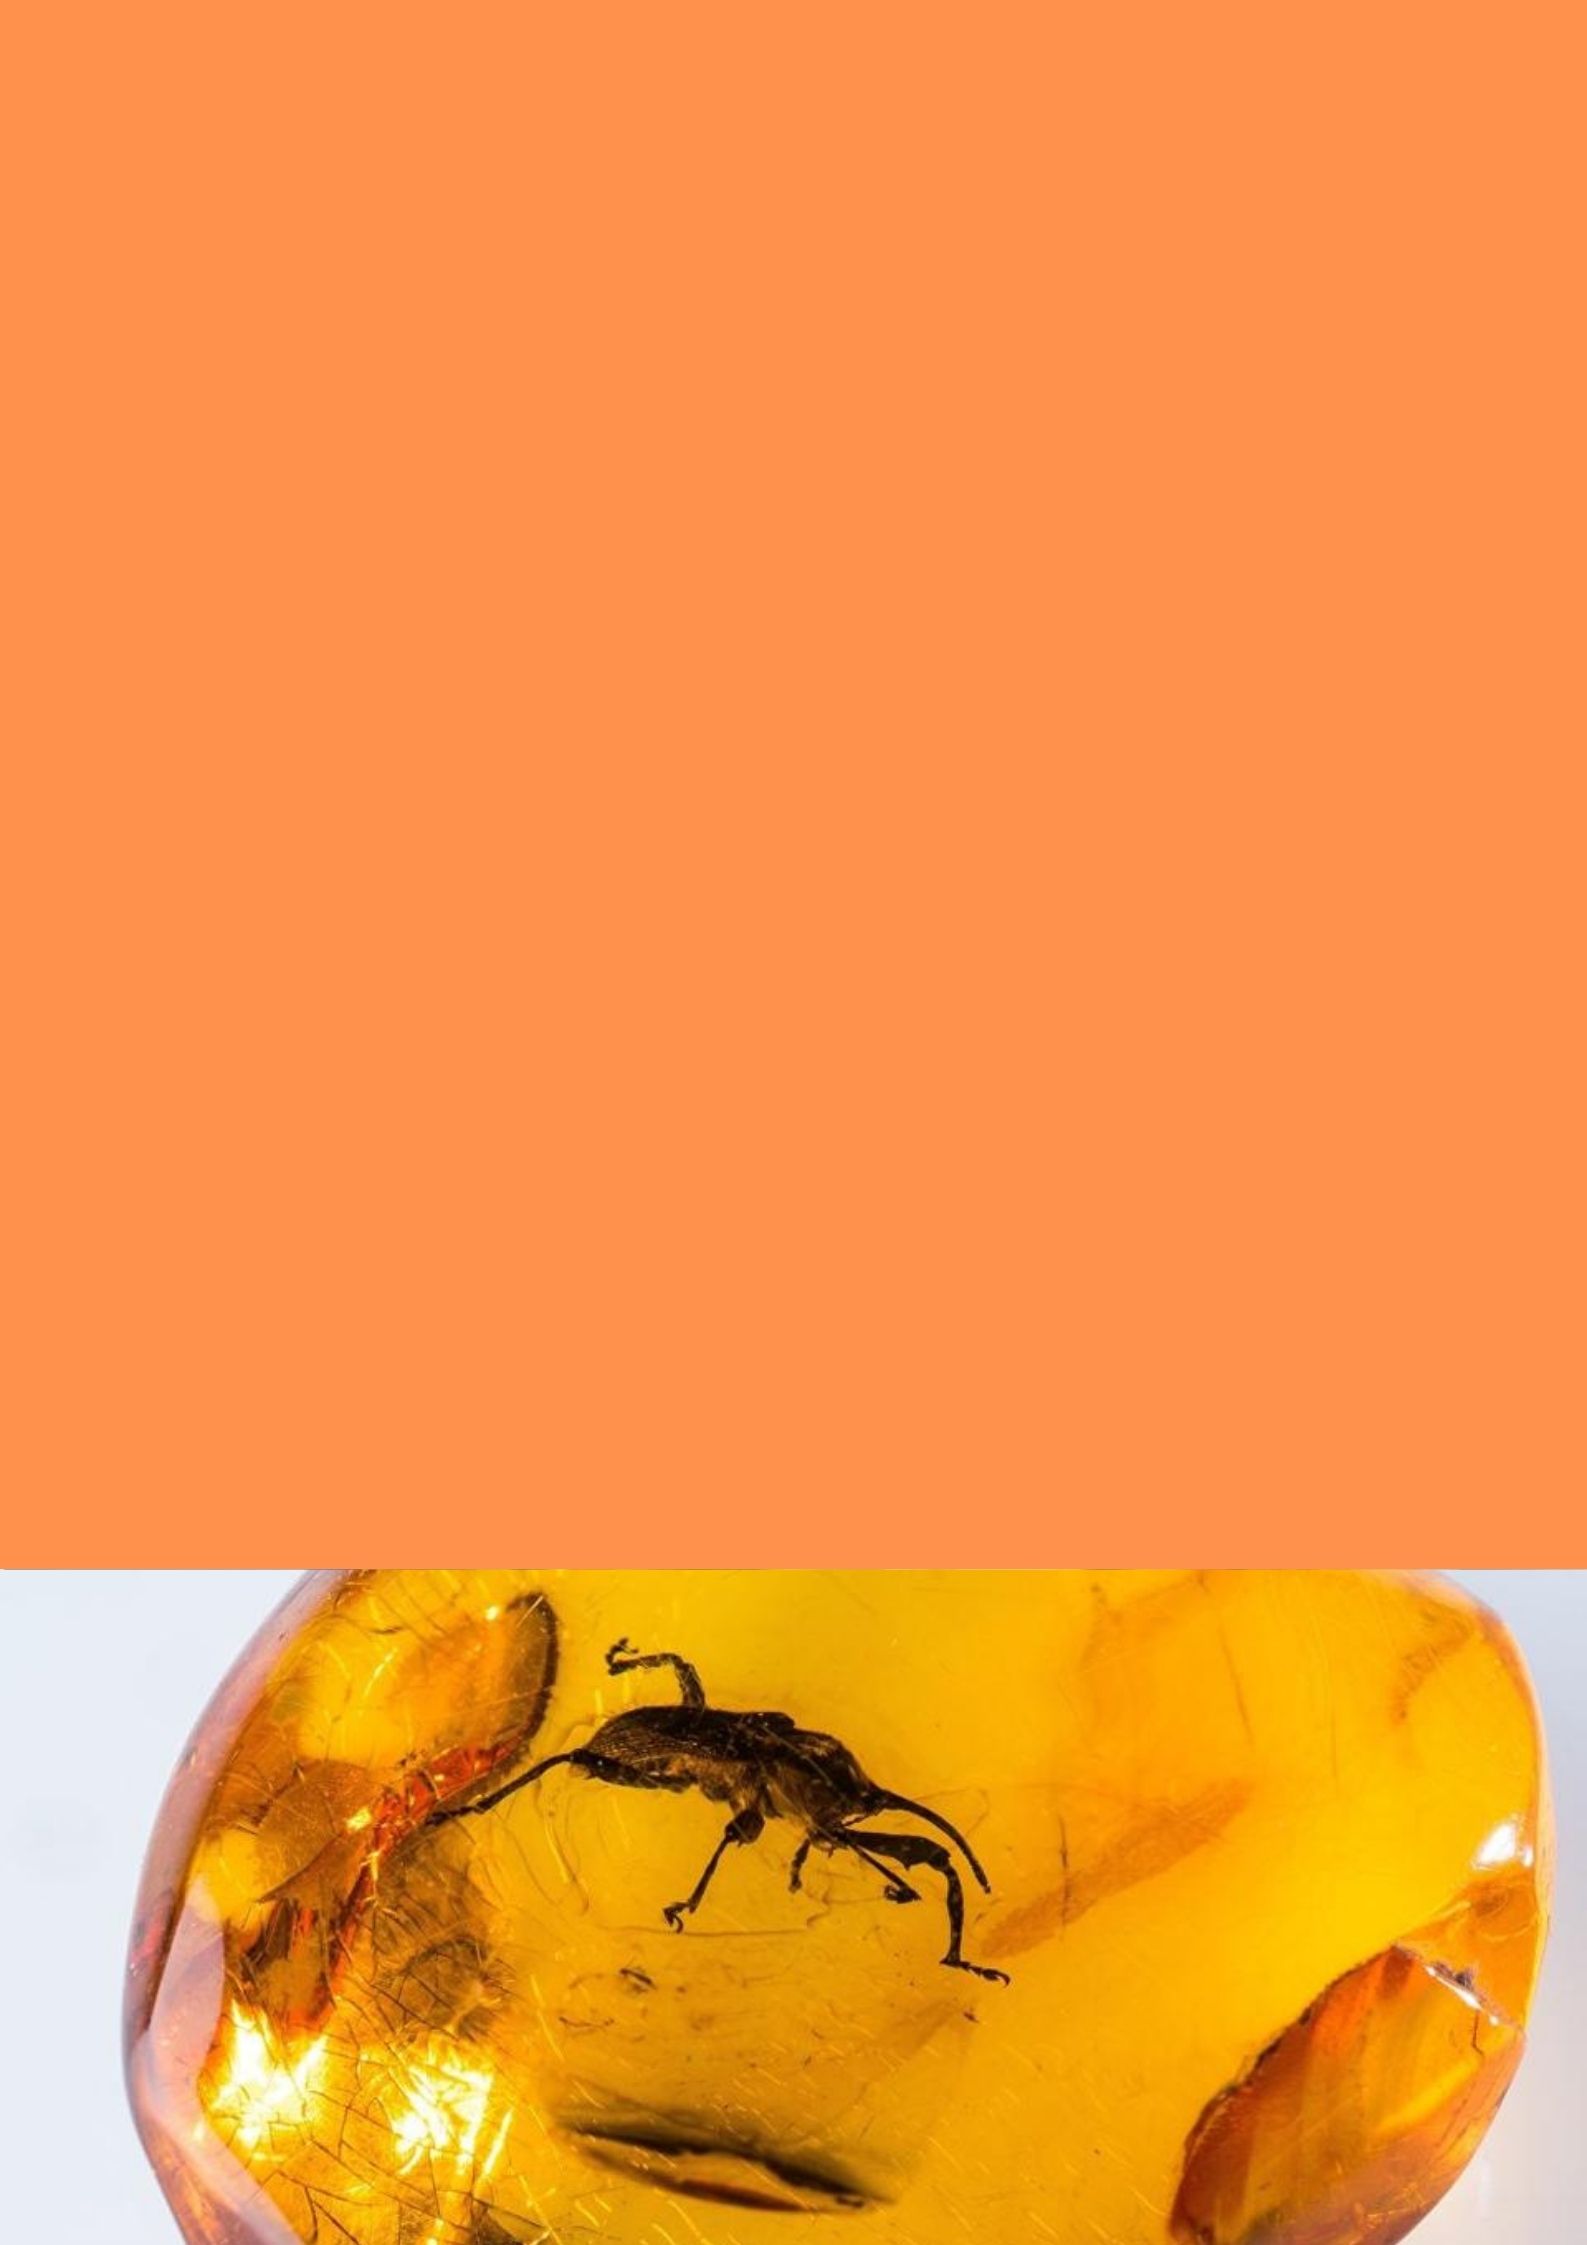 Sperm 100 million years old were found in a piece of amber